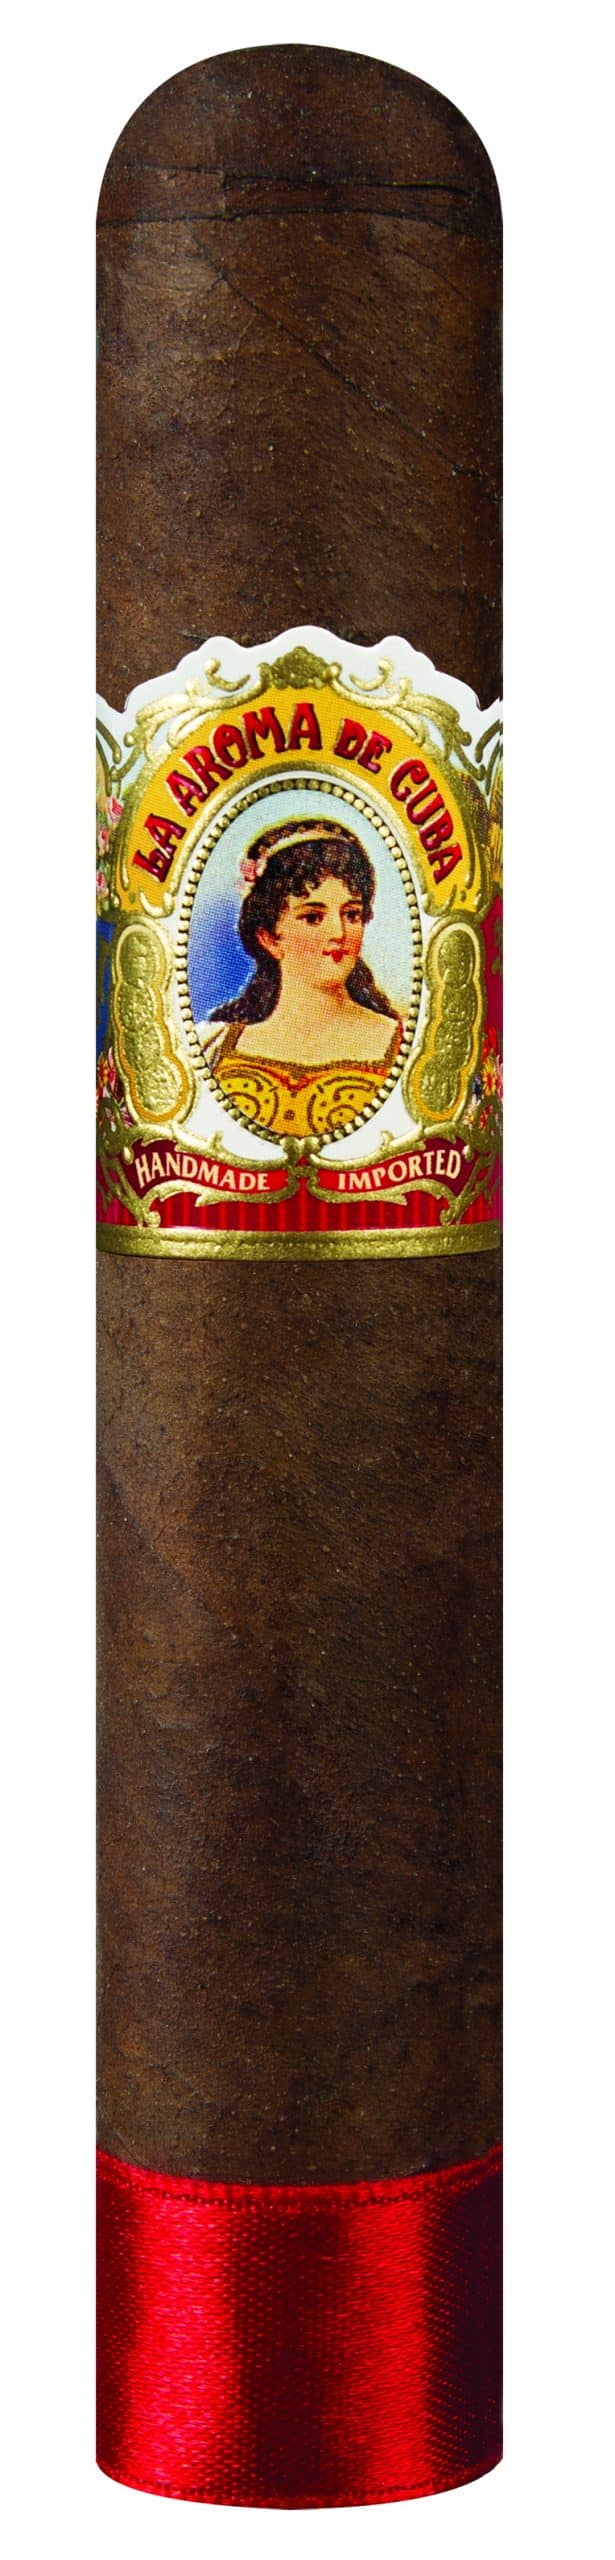 Single La Aroma de Cuba Robusto cigar